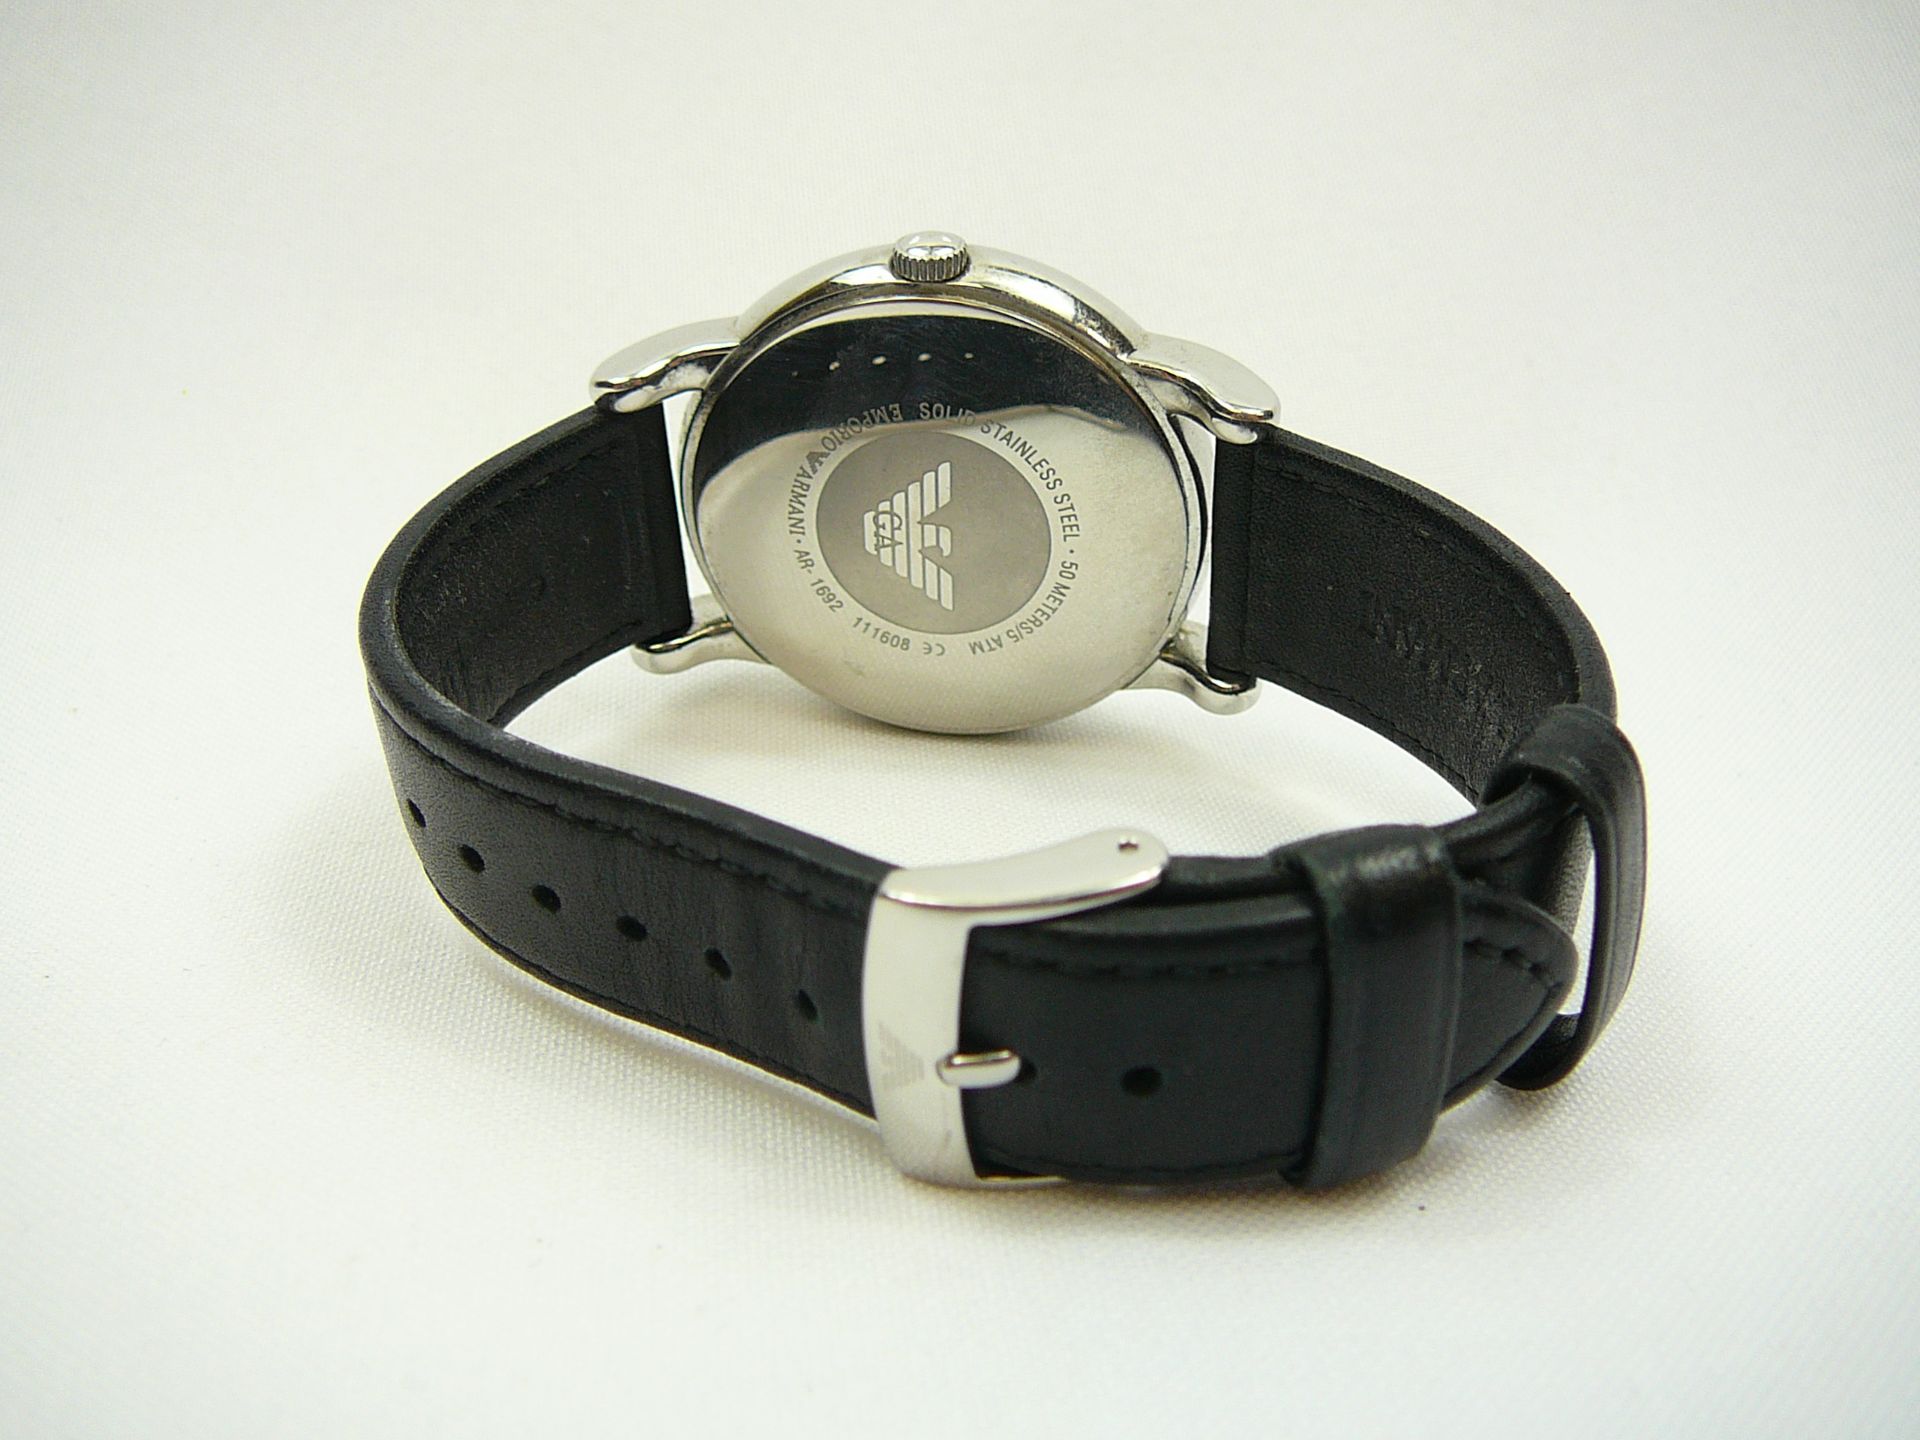 Gents Emporio Armani Wrist Watch - Image 3 of 3